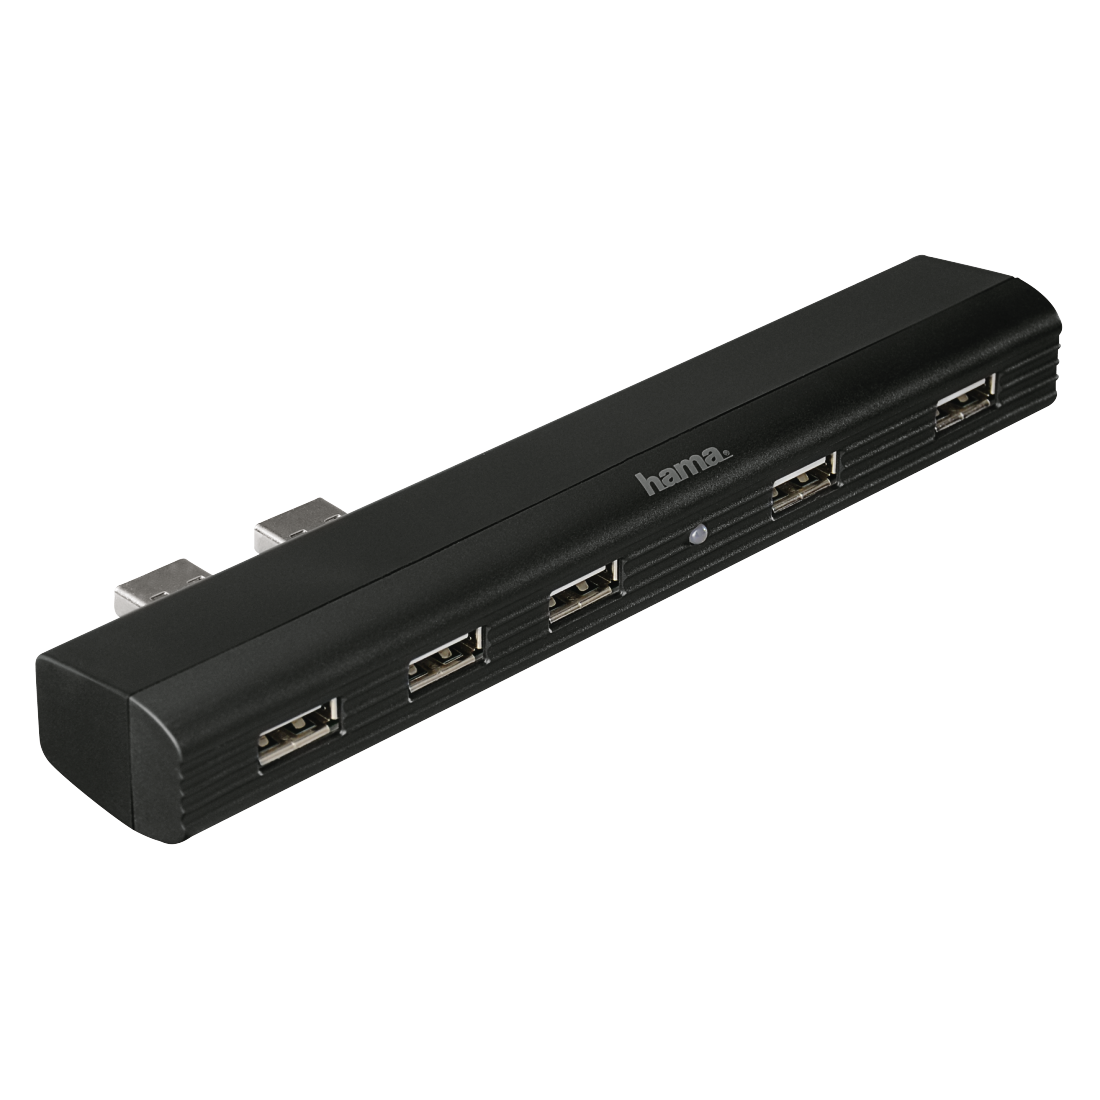 Playstation 3 флешка. Хаб (разветвитель) Hama Slim. Ps3 Slim USB Hub. [Ps3] USB Hub Hama v2. Hama 2 USB.